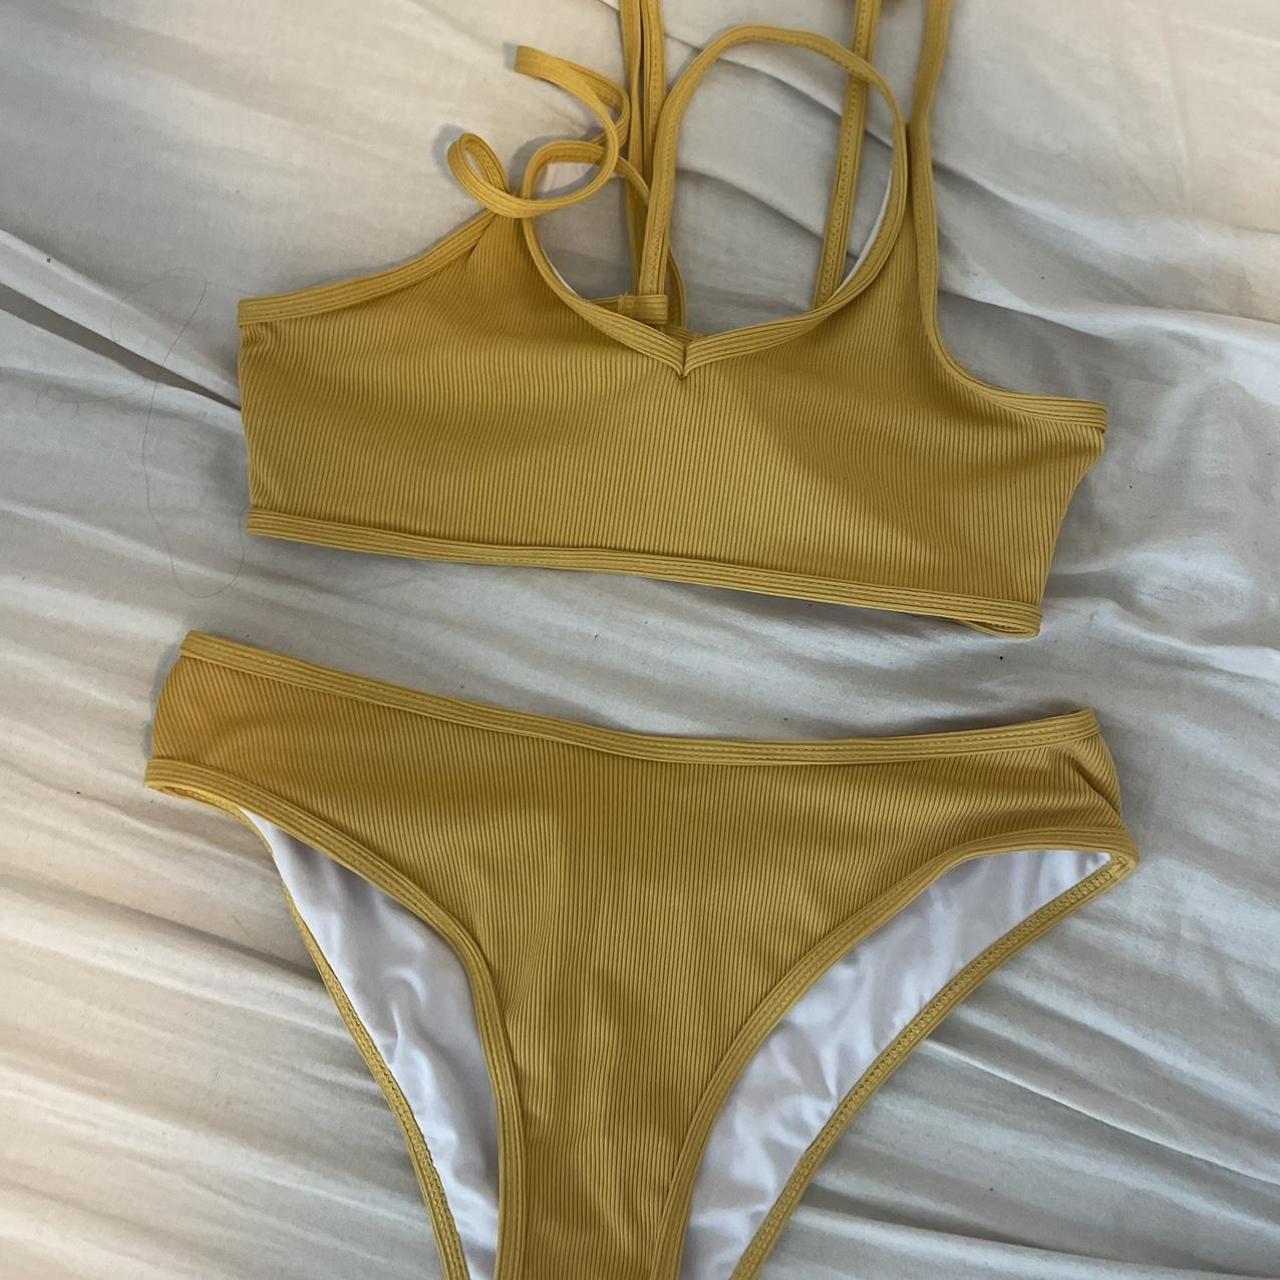 yellow bikini with strapped back - brand new never worn - Depop